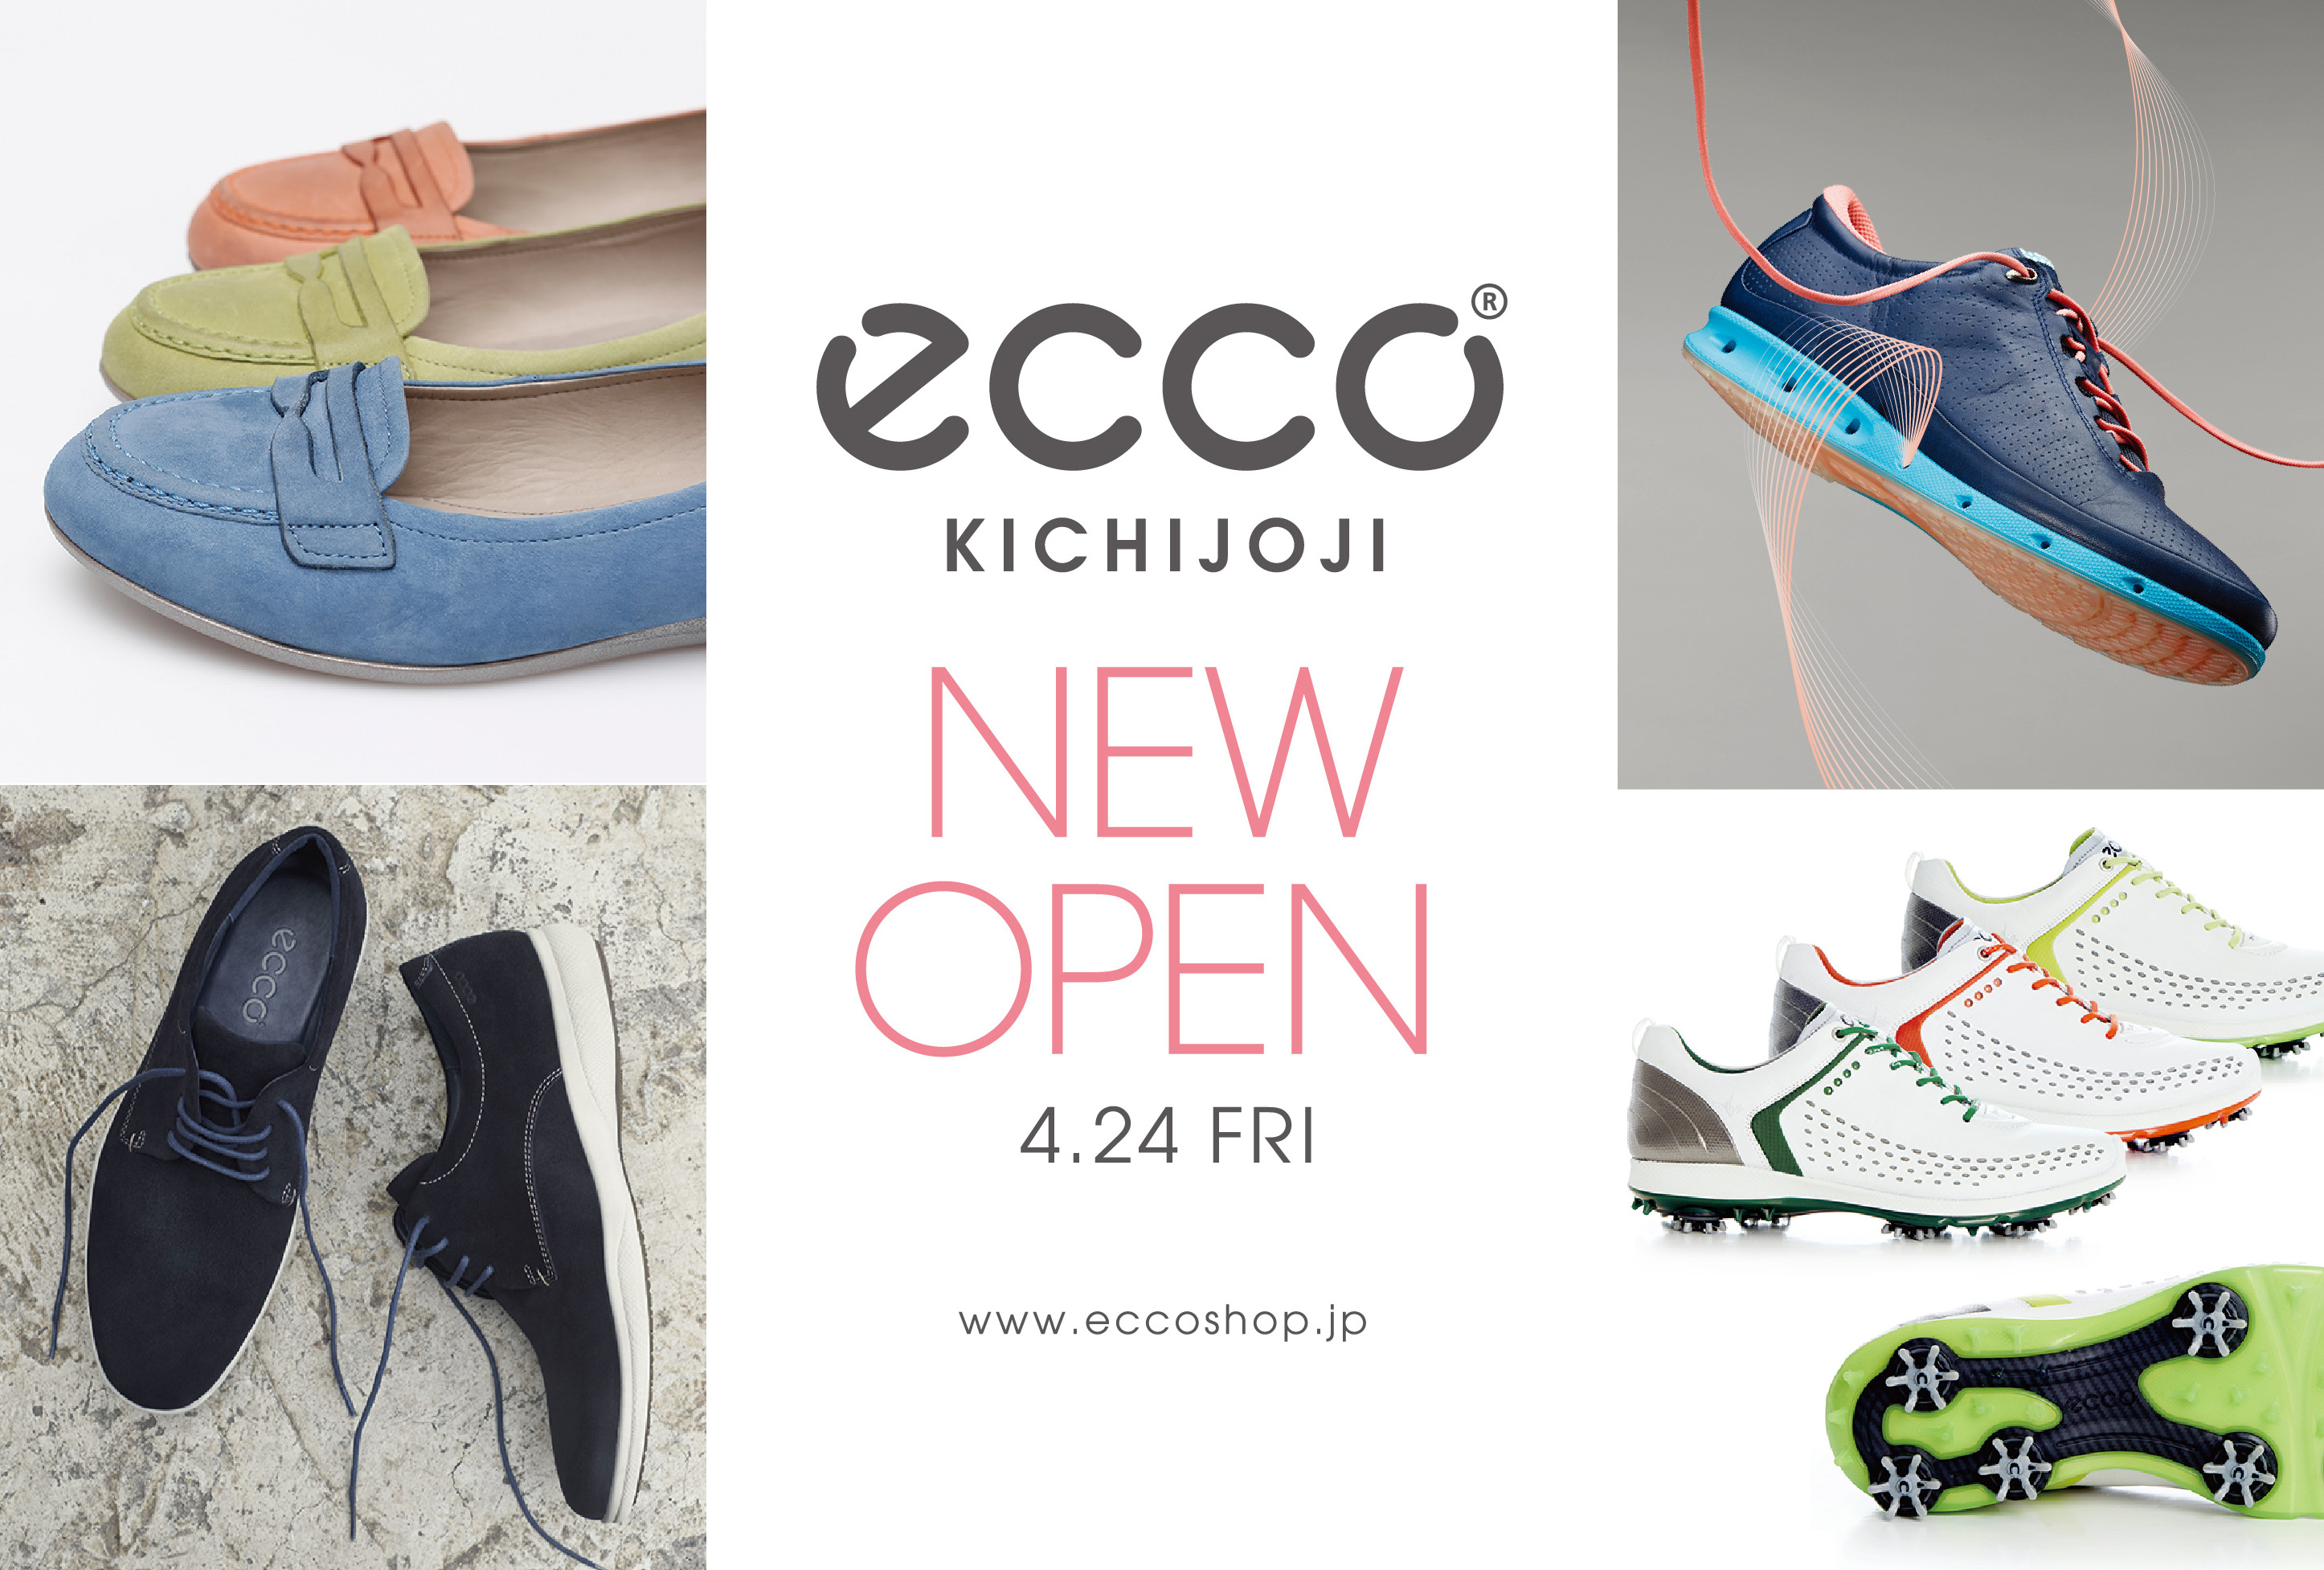 ECCO 2015年4月24日 NEW OPEN！北欧発・コンフォートシューズブランド「ECCO」 日本国内初の二層型路面店｜エコー・ジャパン株式会社のプレスリリース